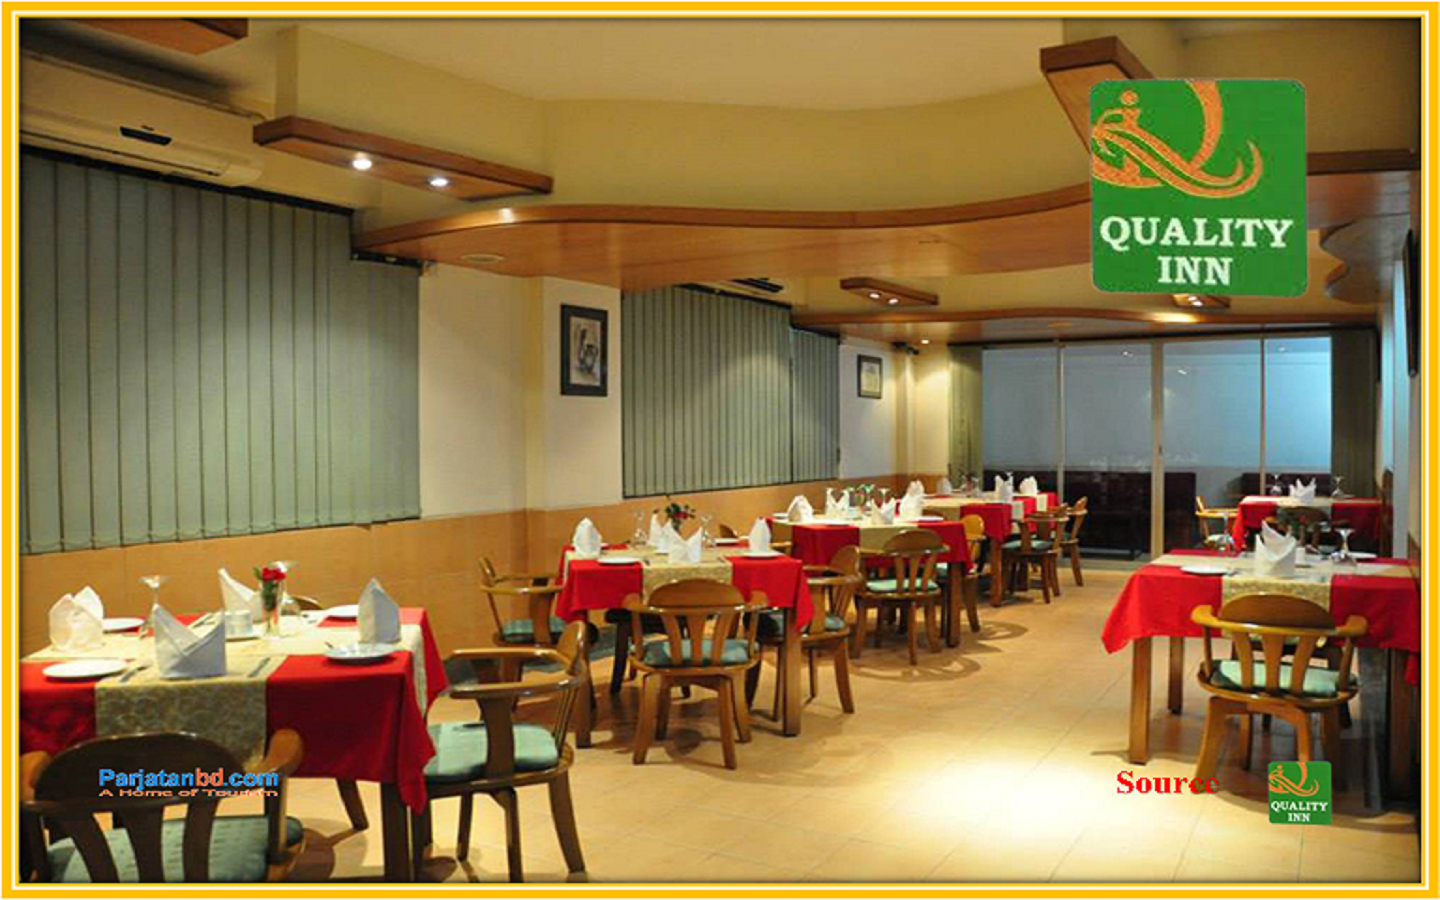 Quality Inn, Gulshan 2 Picture-1